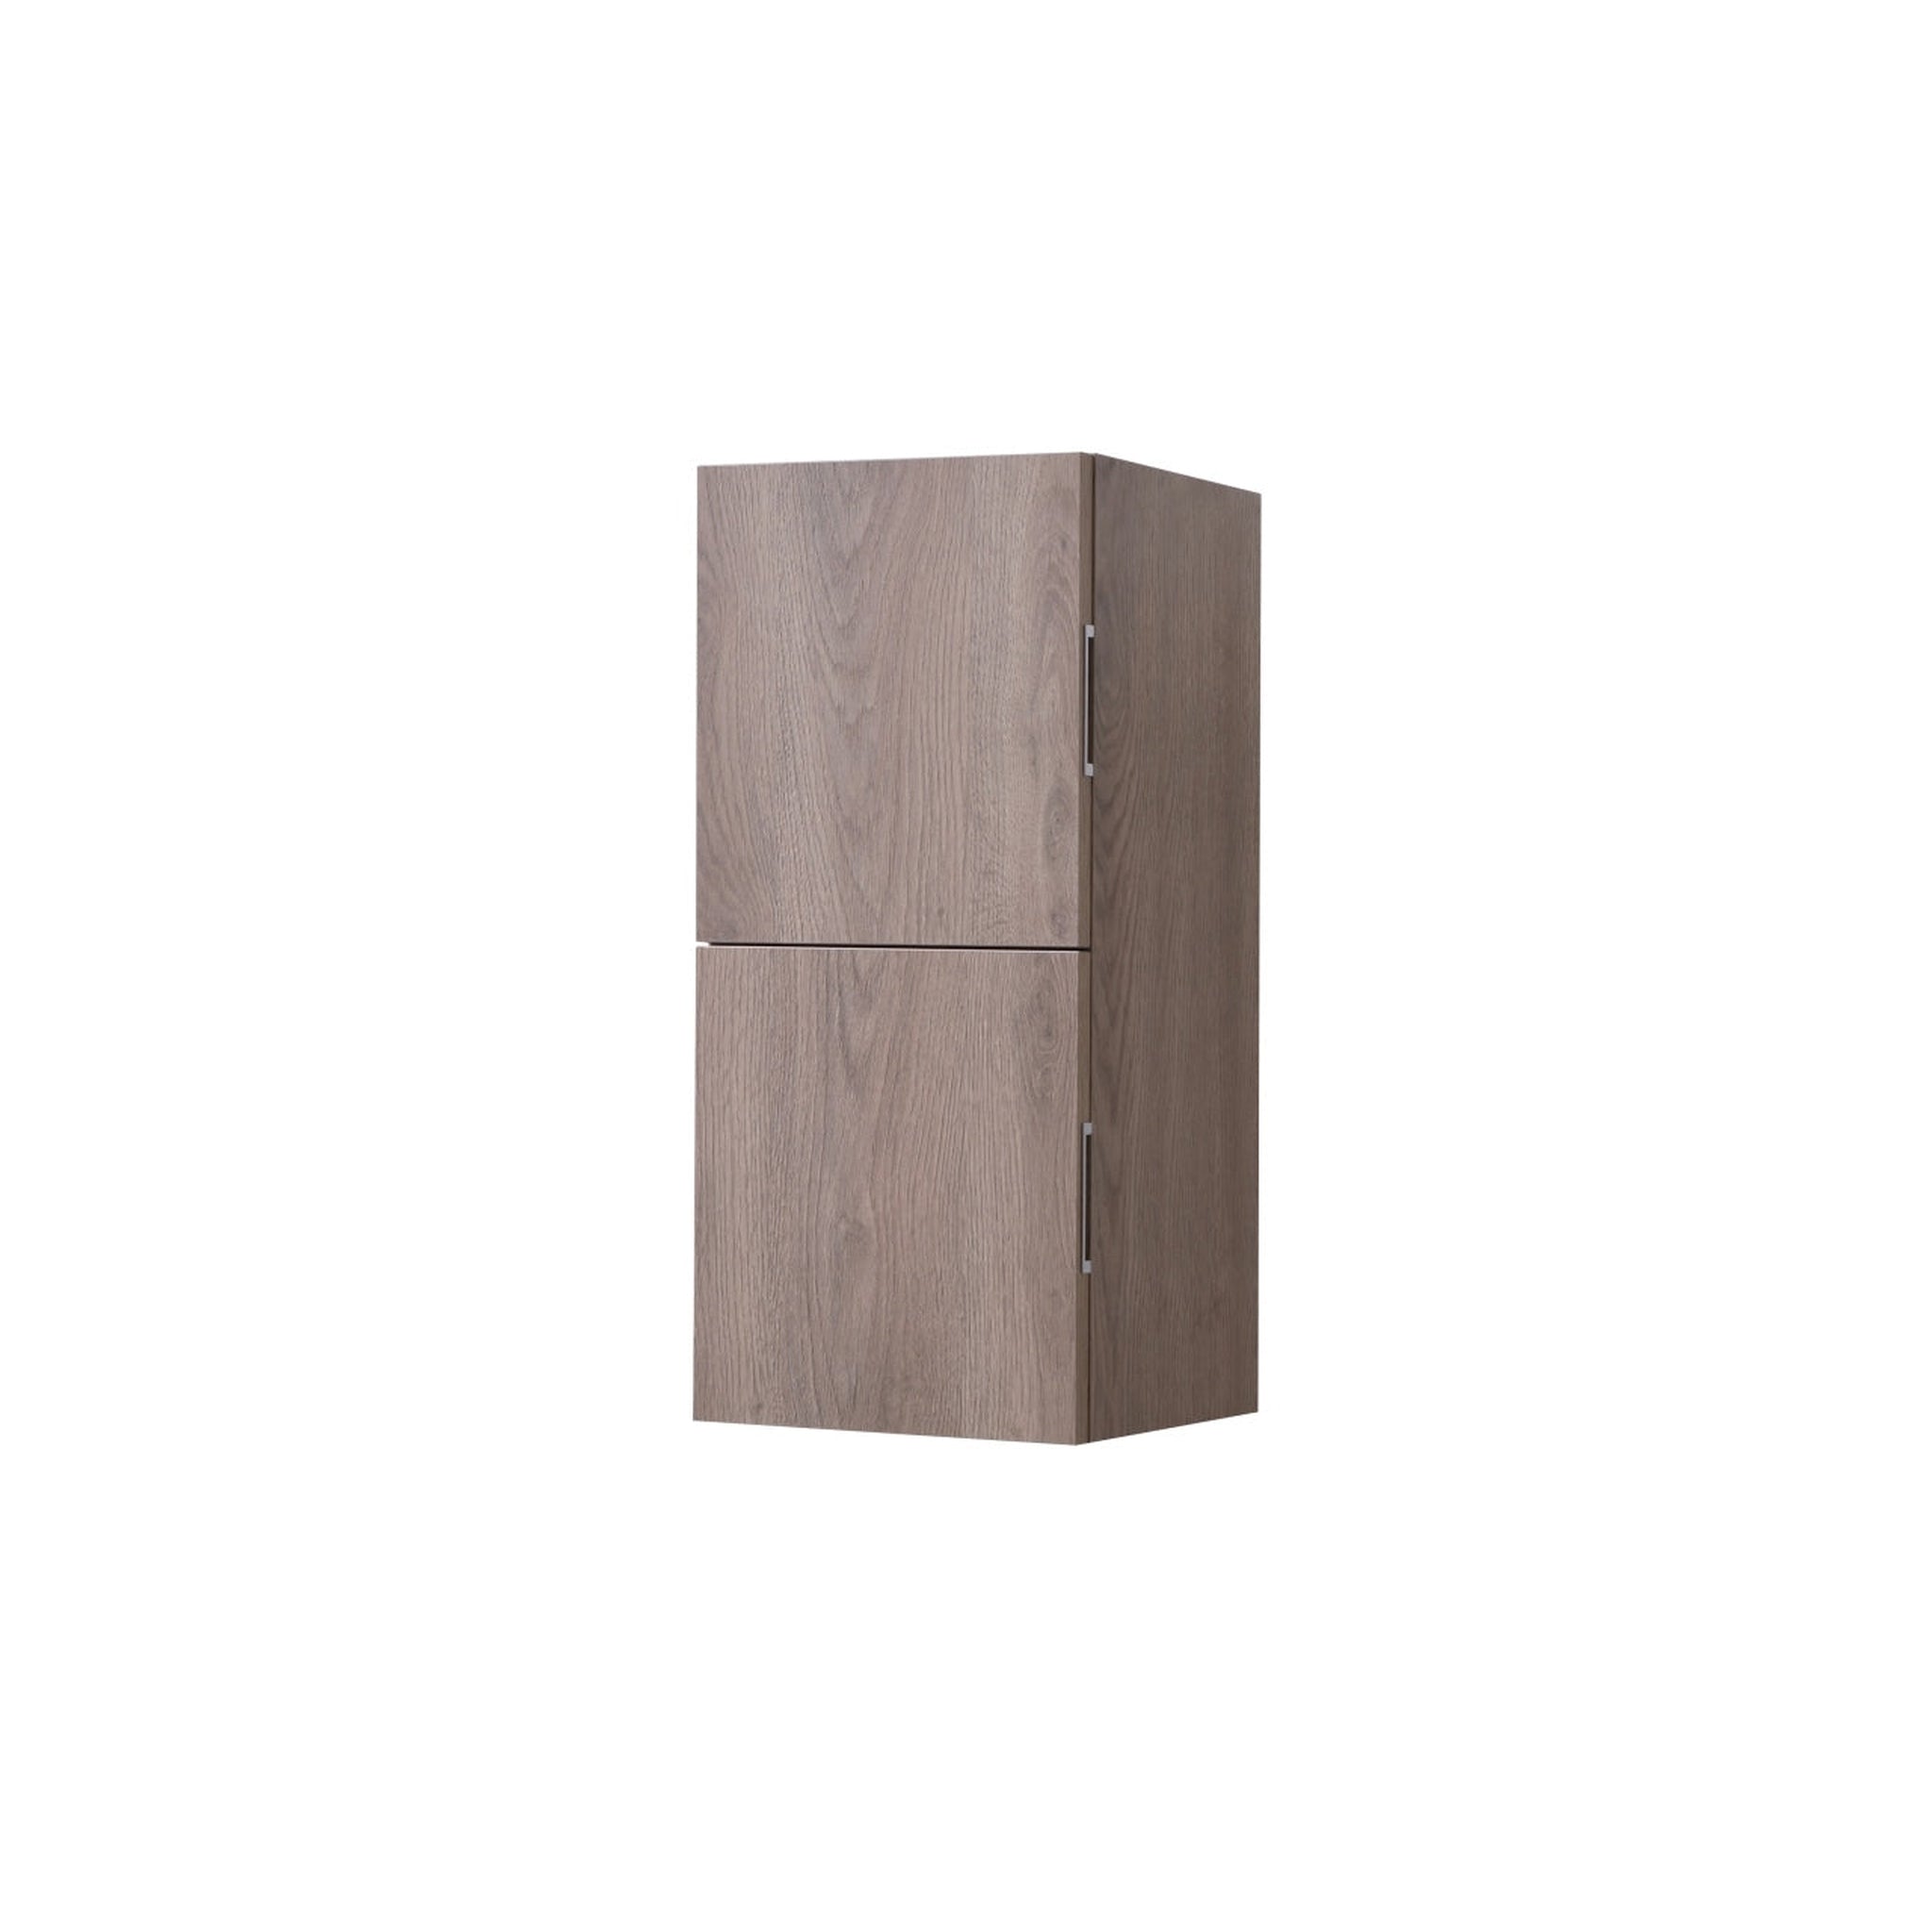 KubeBath, KubeBath Bliss 12"x 28" Butternut Wood Veneer Linen Side Cabinet With Two Storage Areas